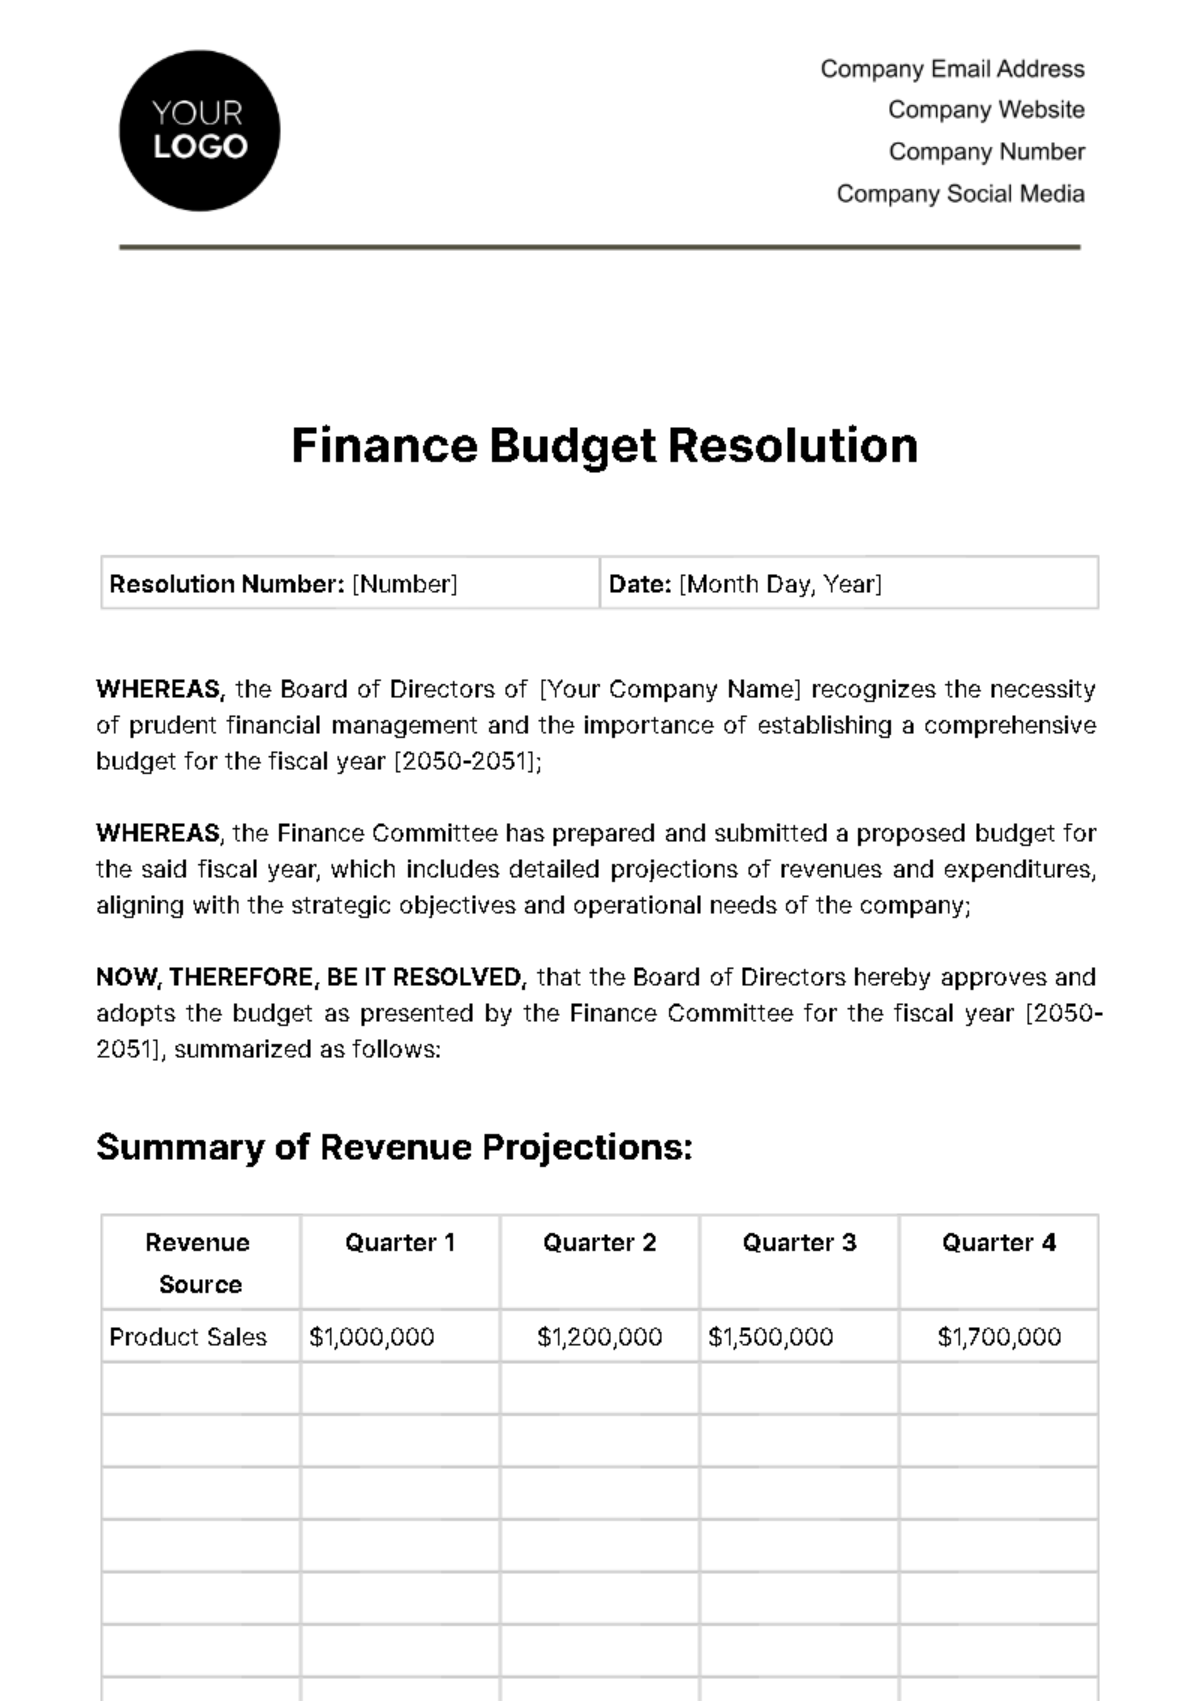 Finance Budget Resolution Template